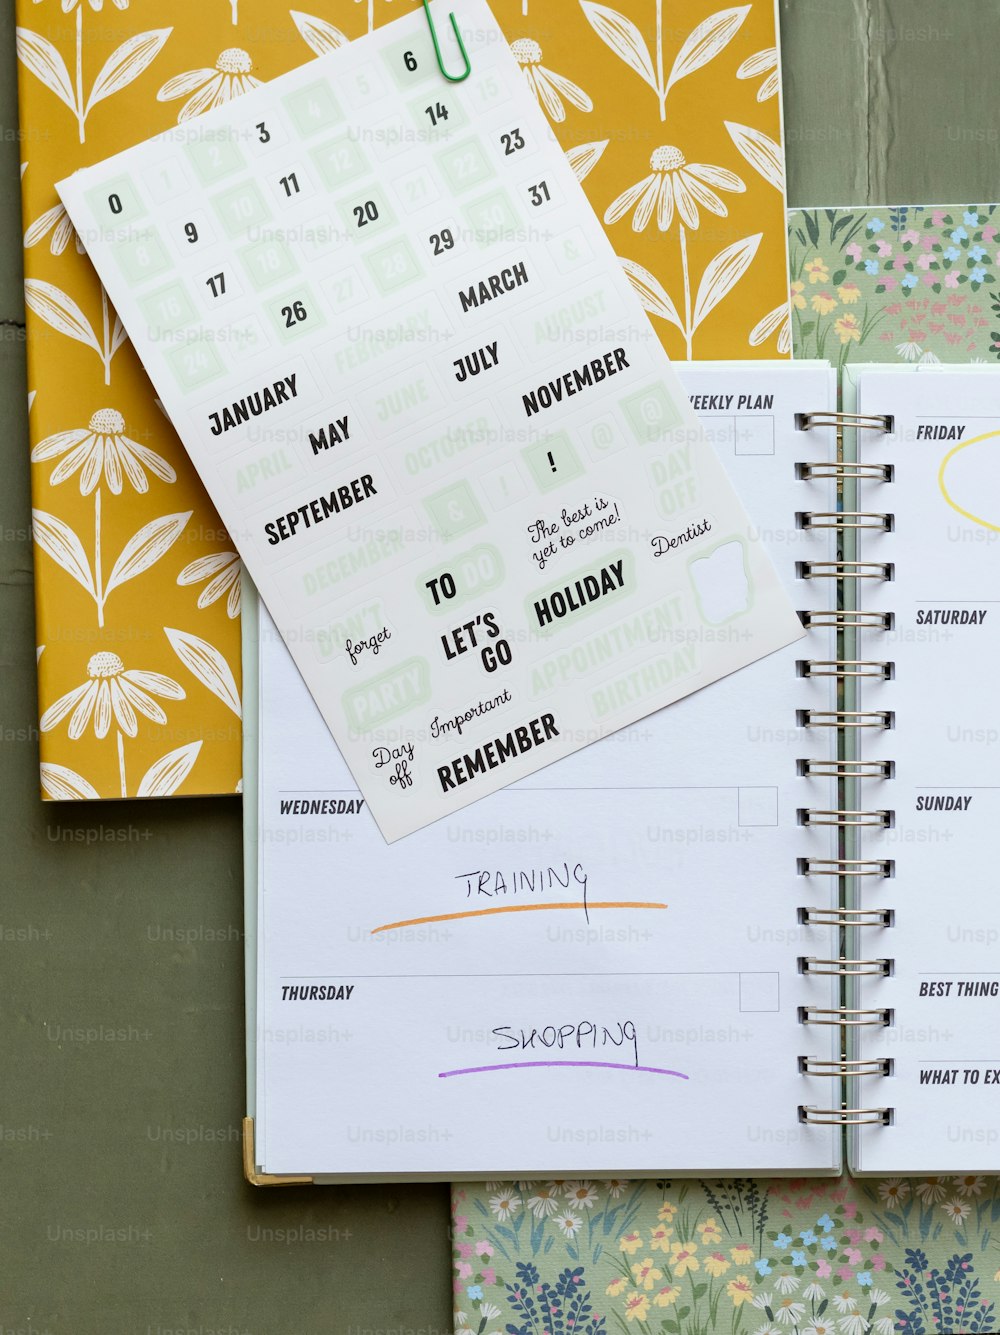 a planner and a calendar on a table